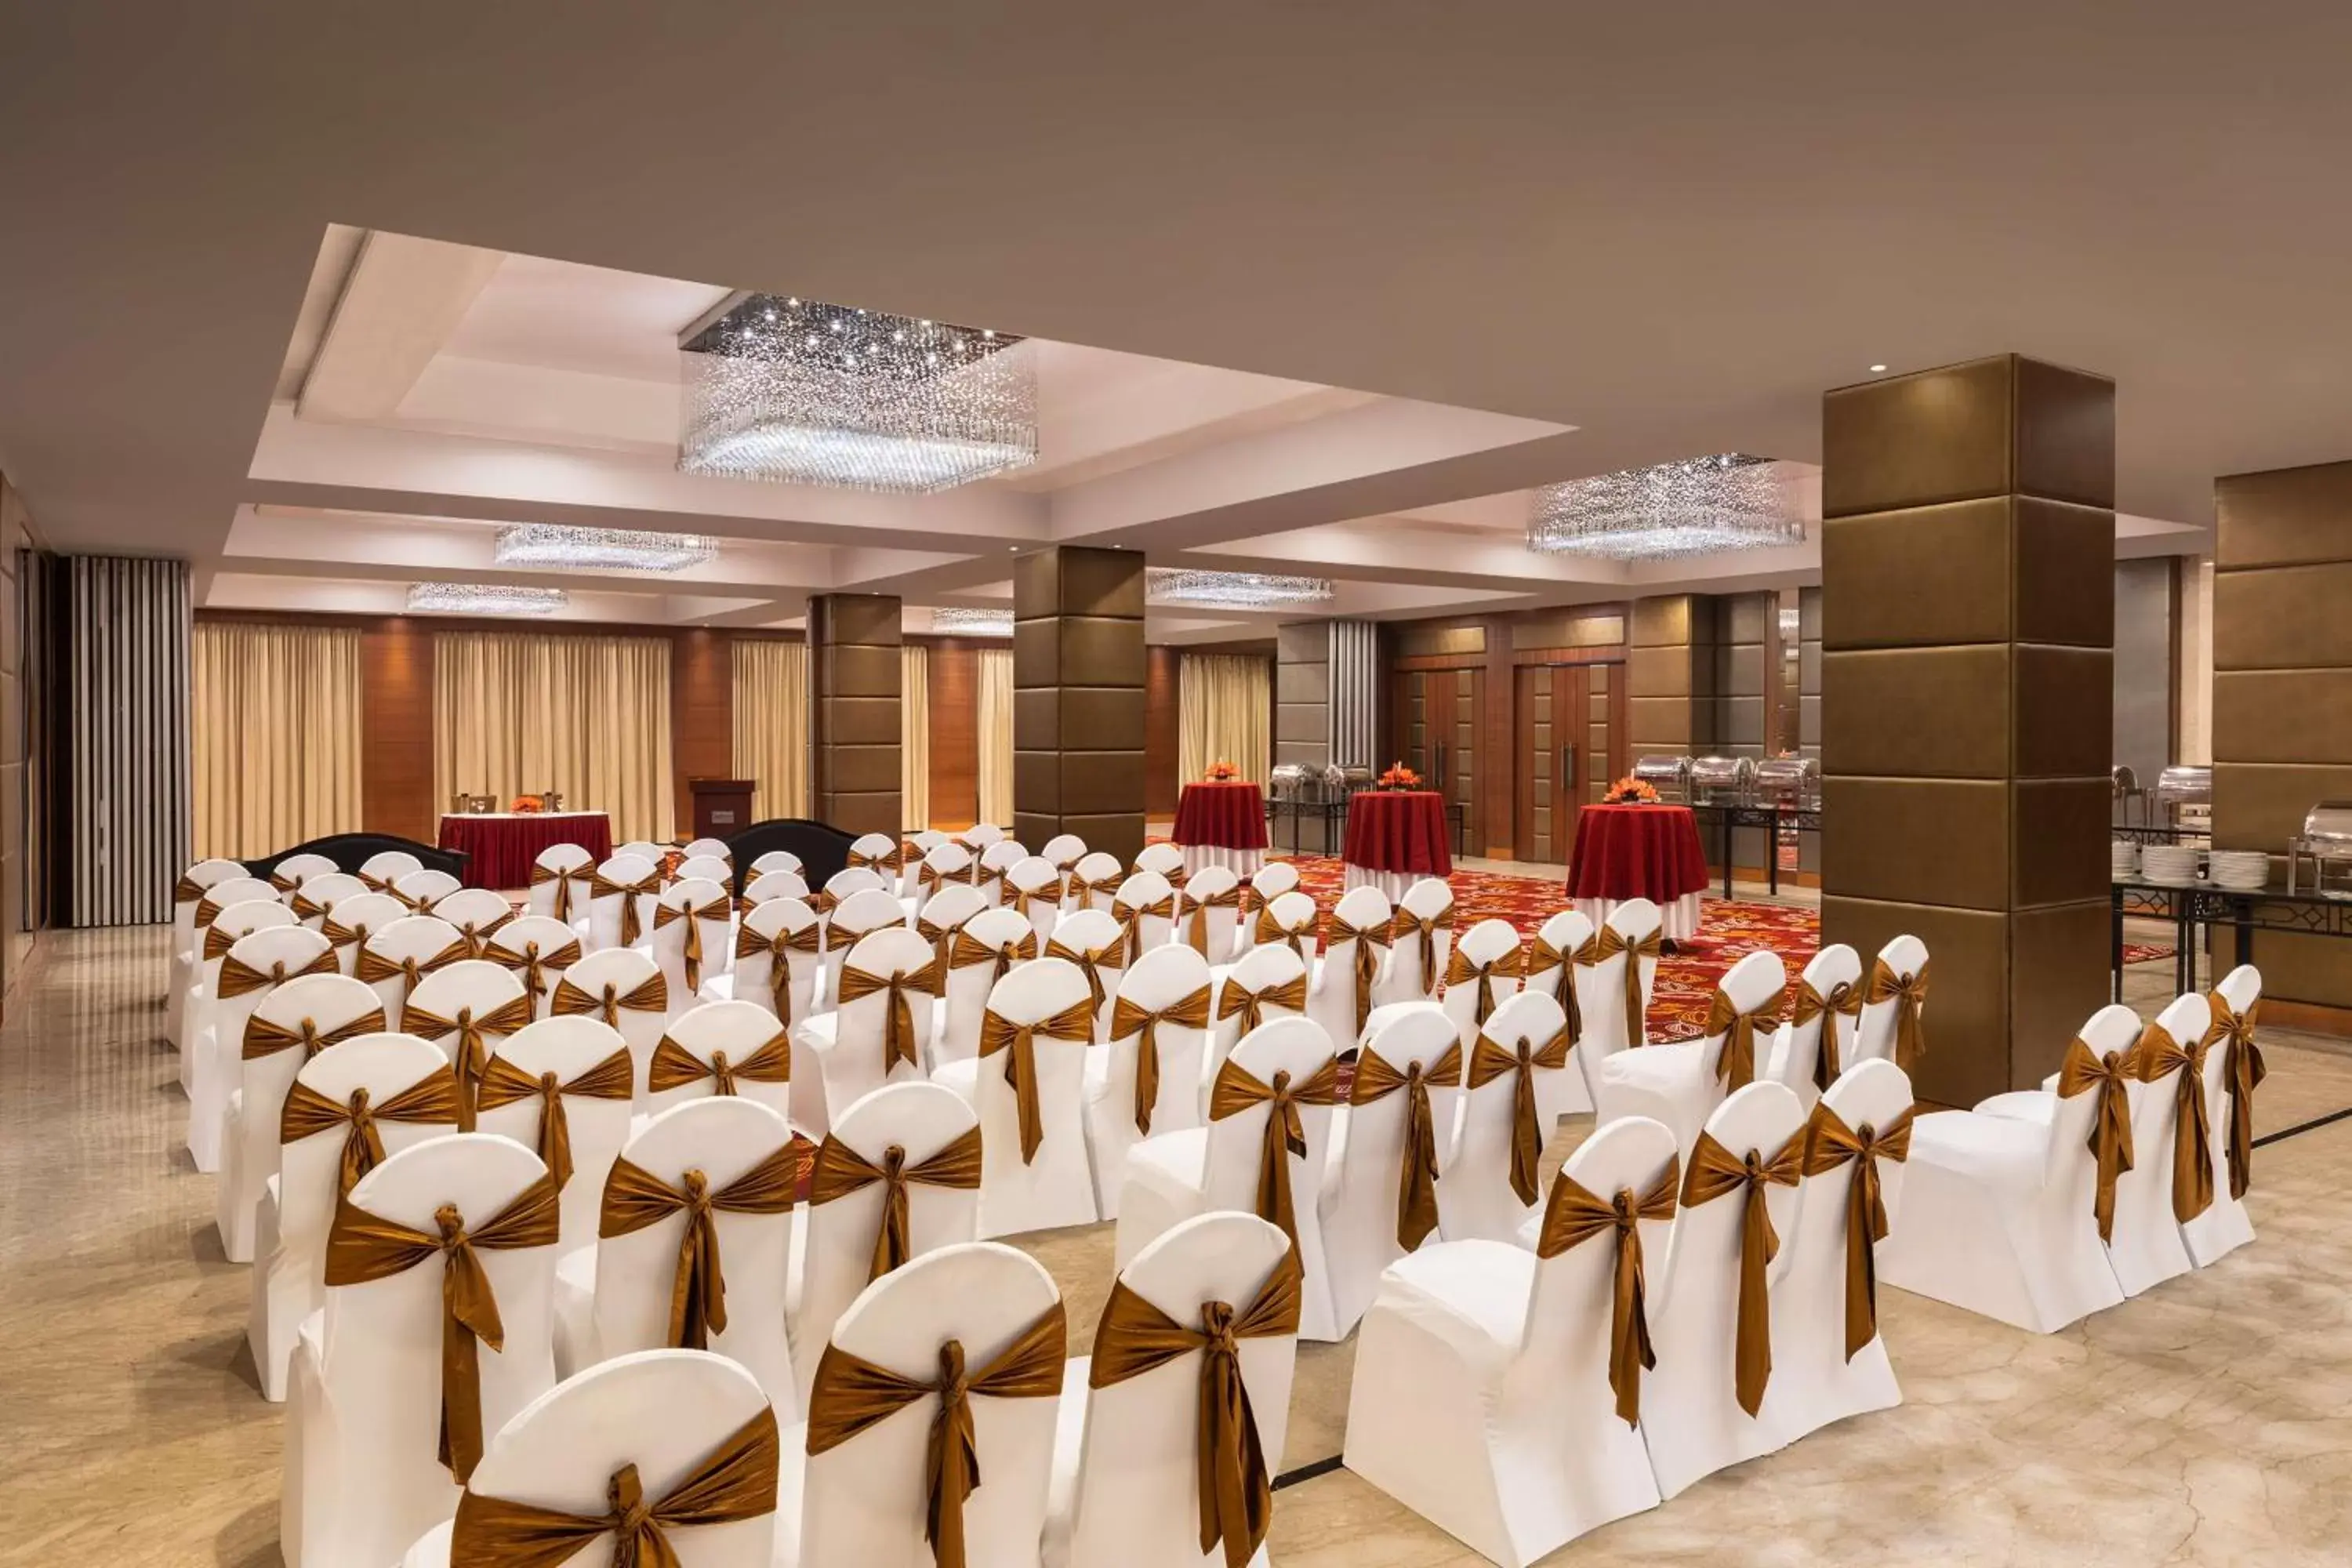 Banquet/Function facilities, Banquet Facilities in Radisson Jaipur City Center